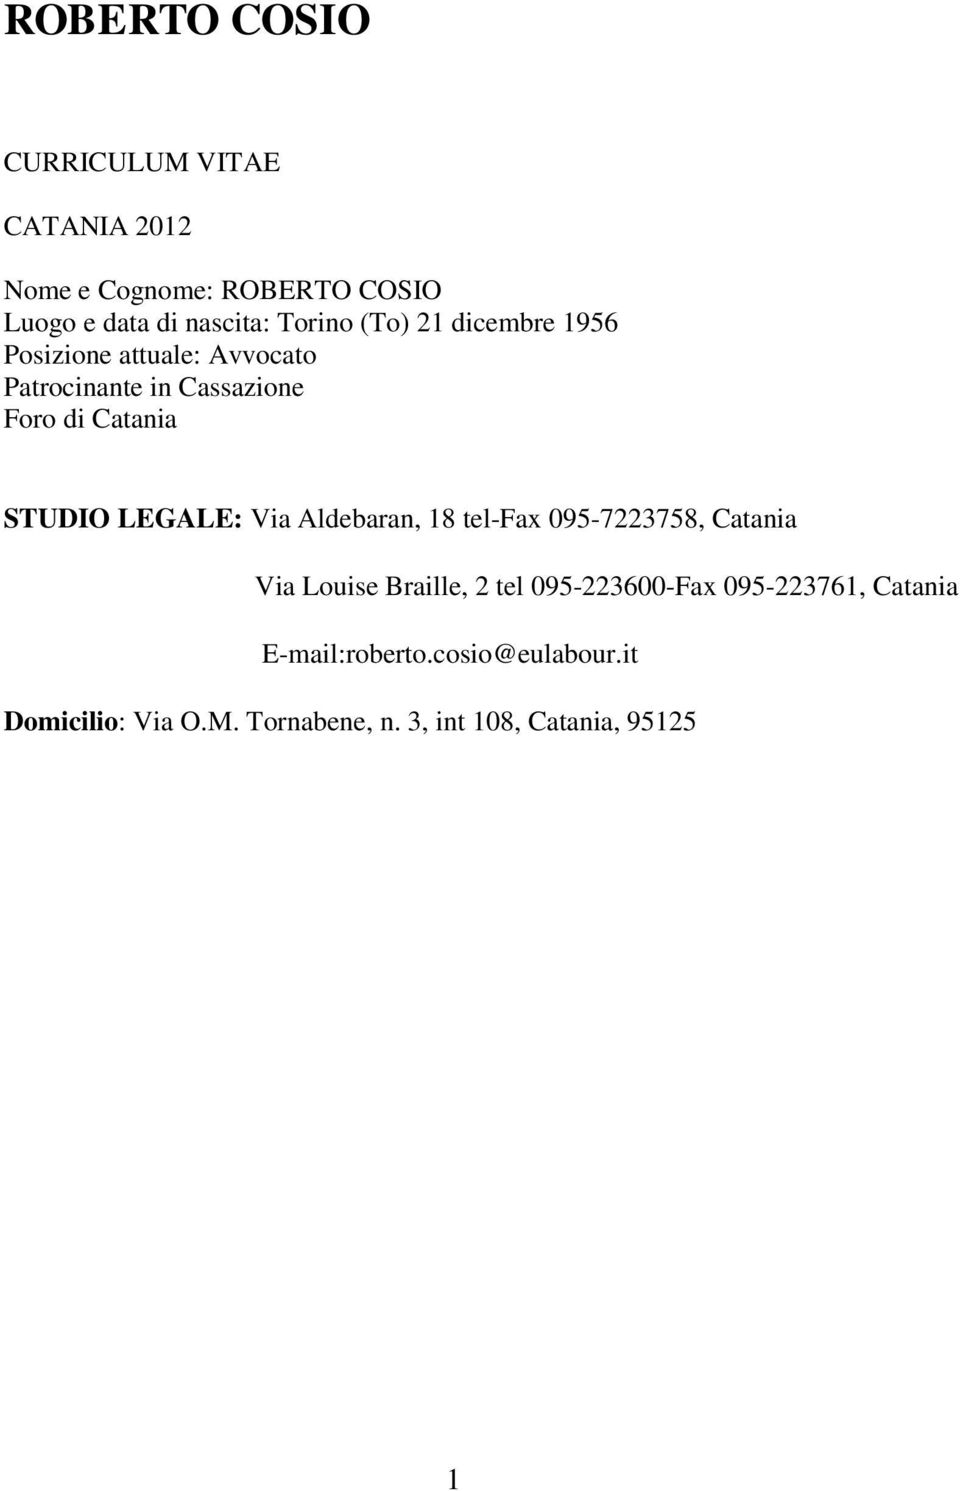 STUDIO LEGALE: Via Aldebaran, 18 tel-fax 095-7223758, Catania Via Louise Braille, 2 tel 095-223600-Fax